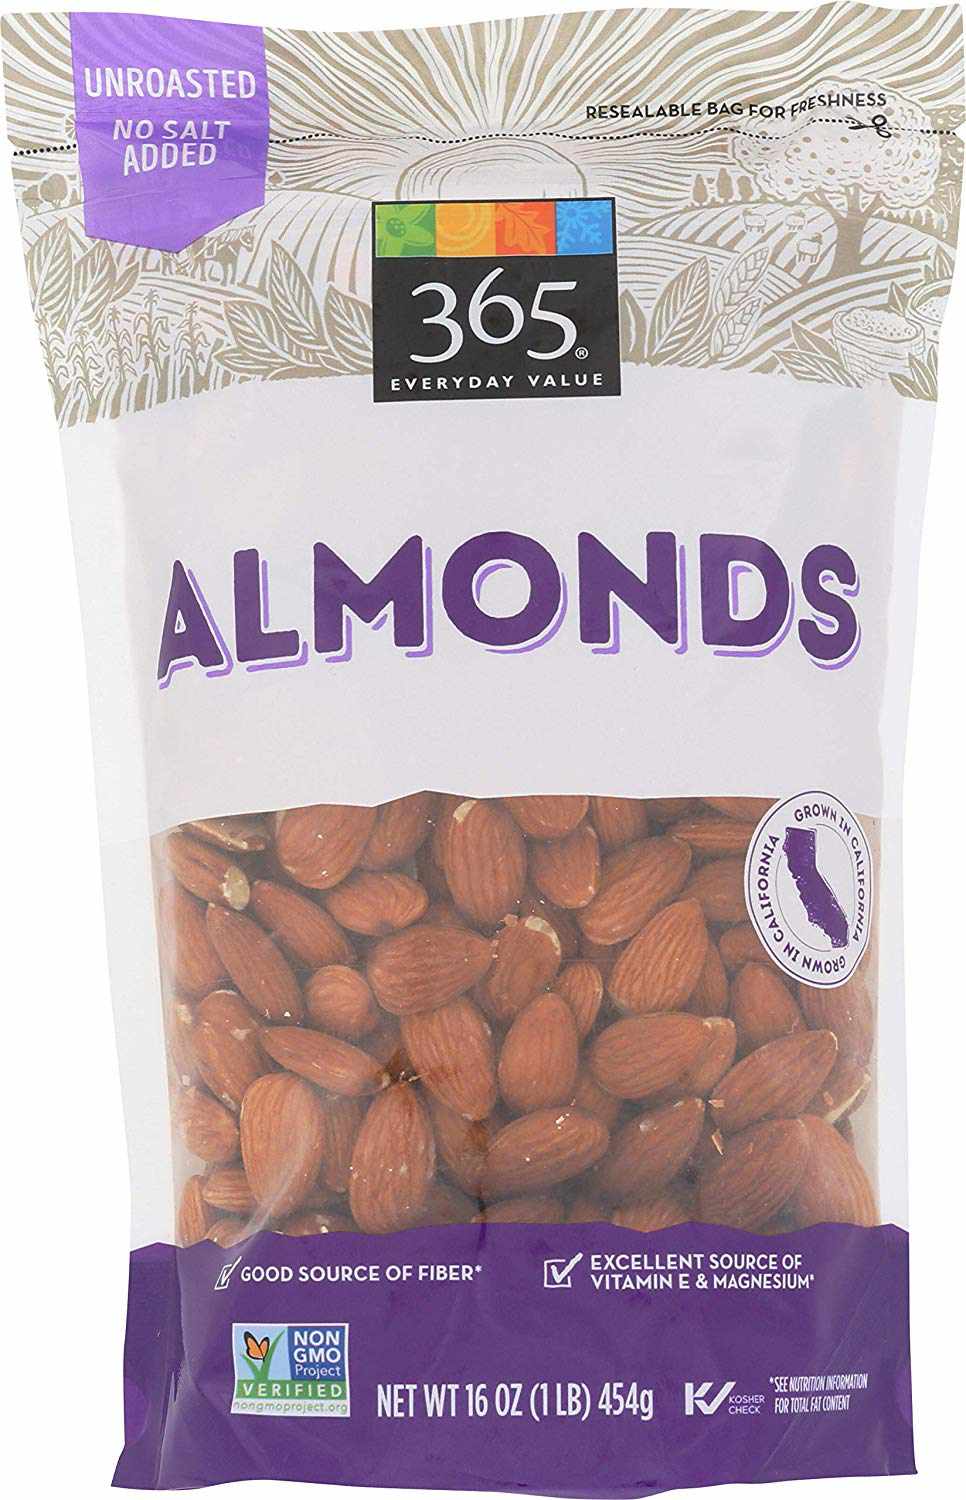 Bag of almonds